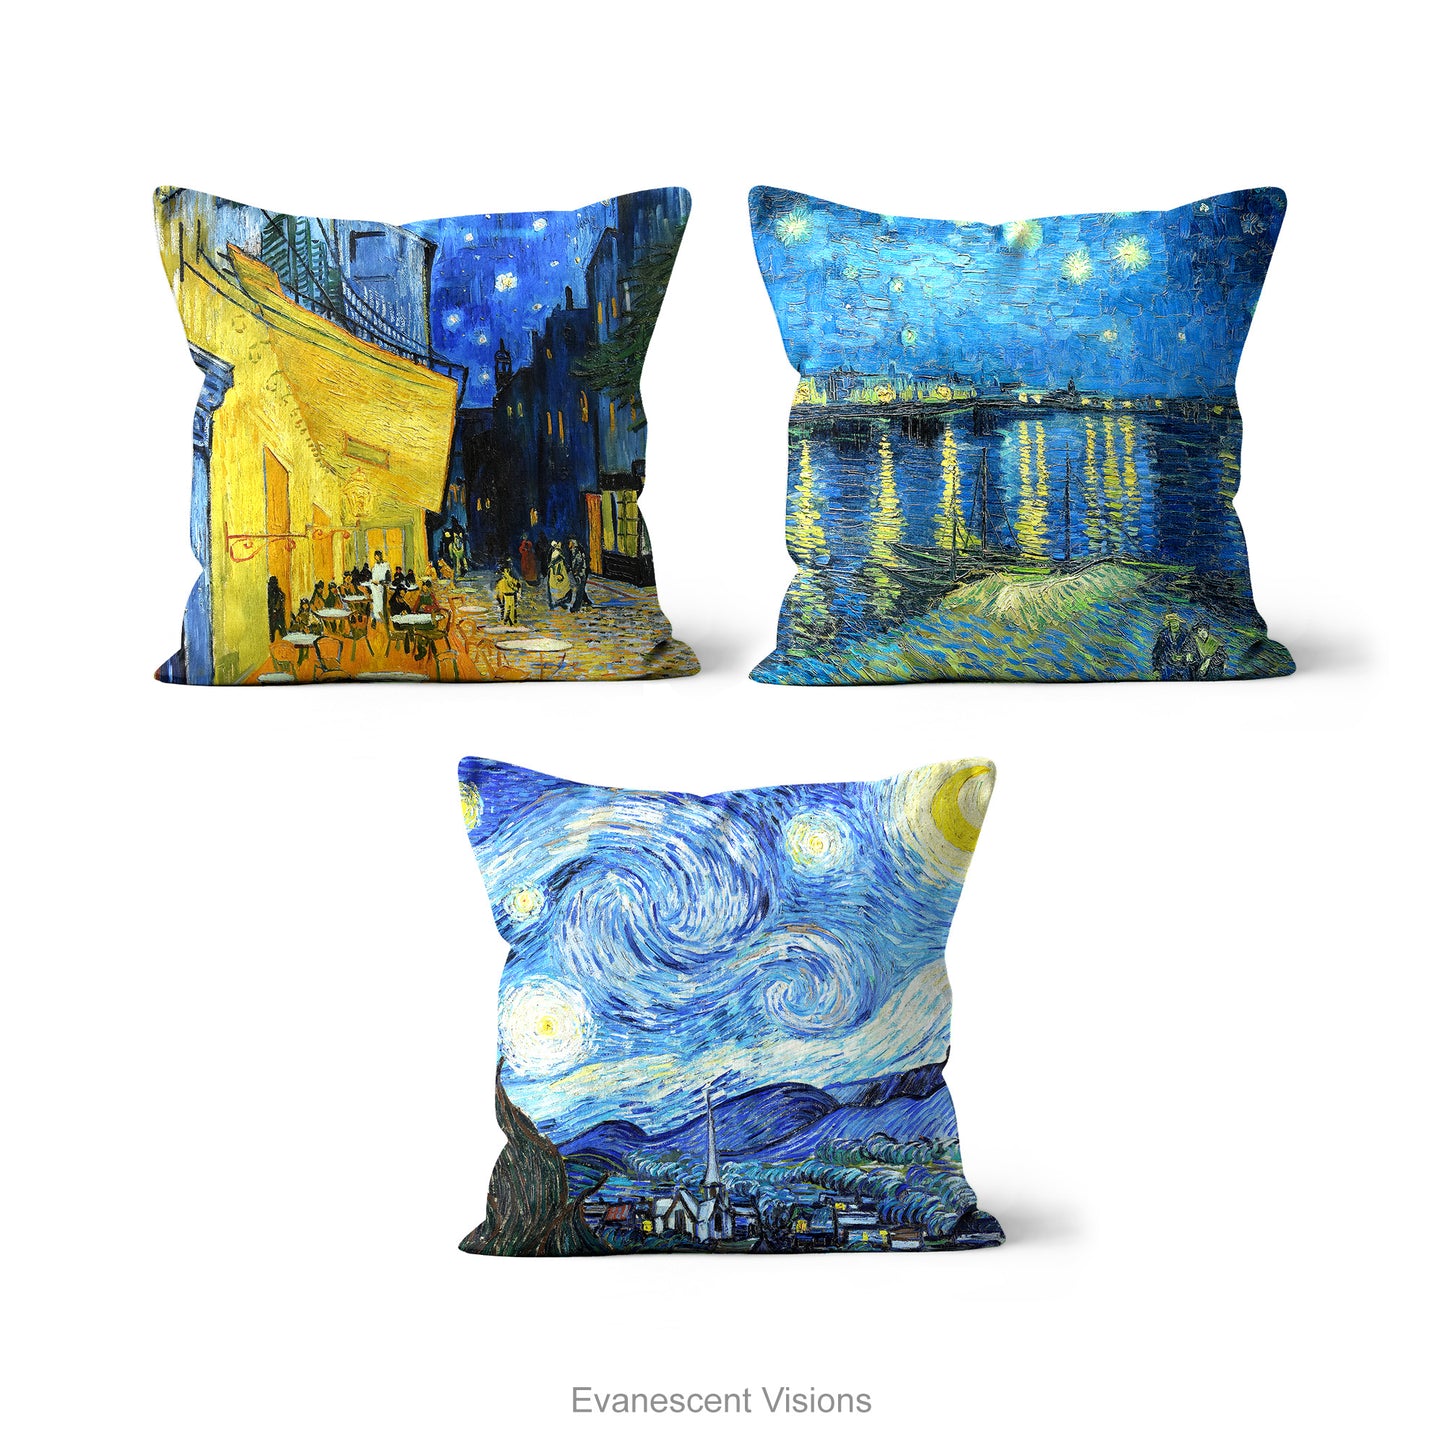 Van Gogh Decorative Art Cushion, Starry Night, Cafe Terrace at Night